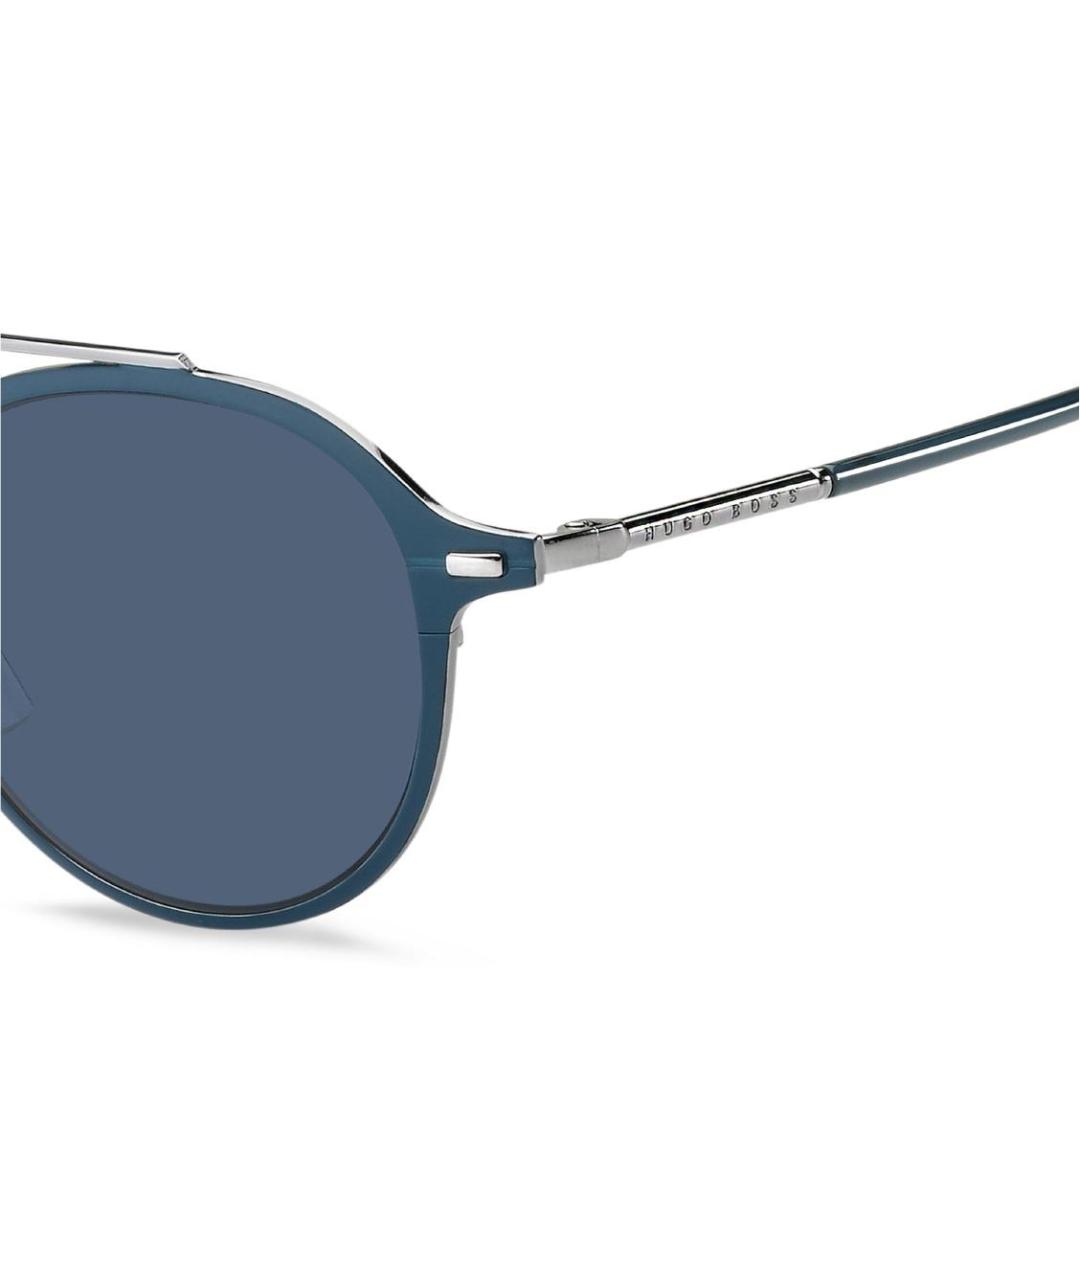 HUGO BOSS Синие металлические солнцезащитные очки, фото 3